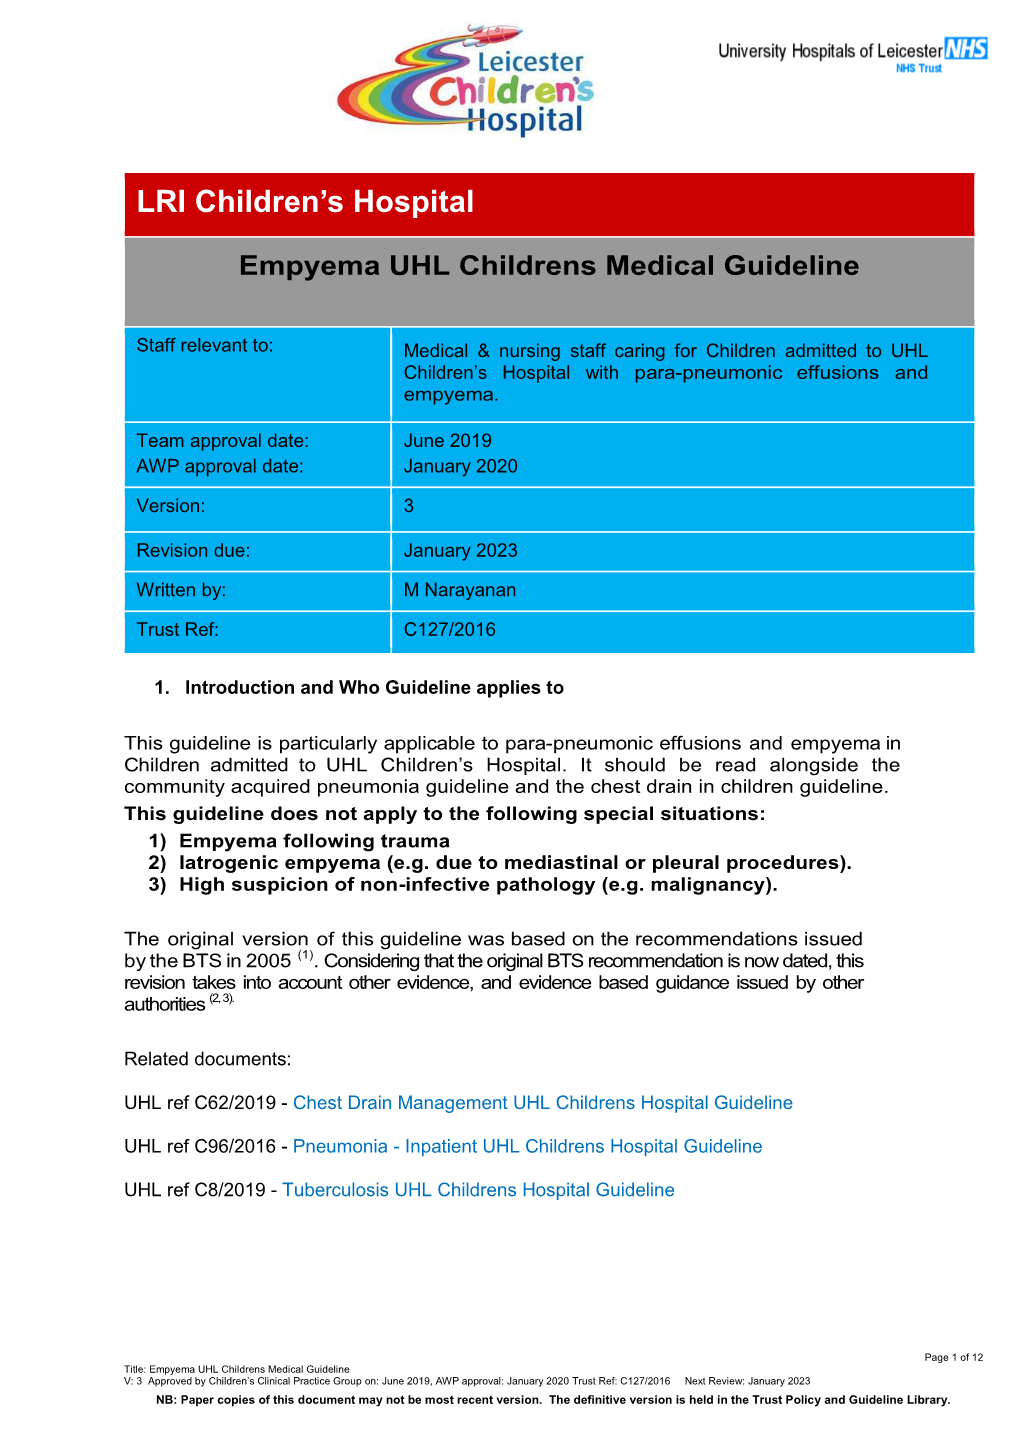 Empyema UHL Childrens Medical Guideline